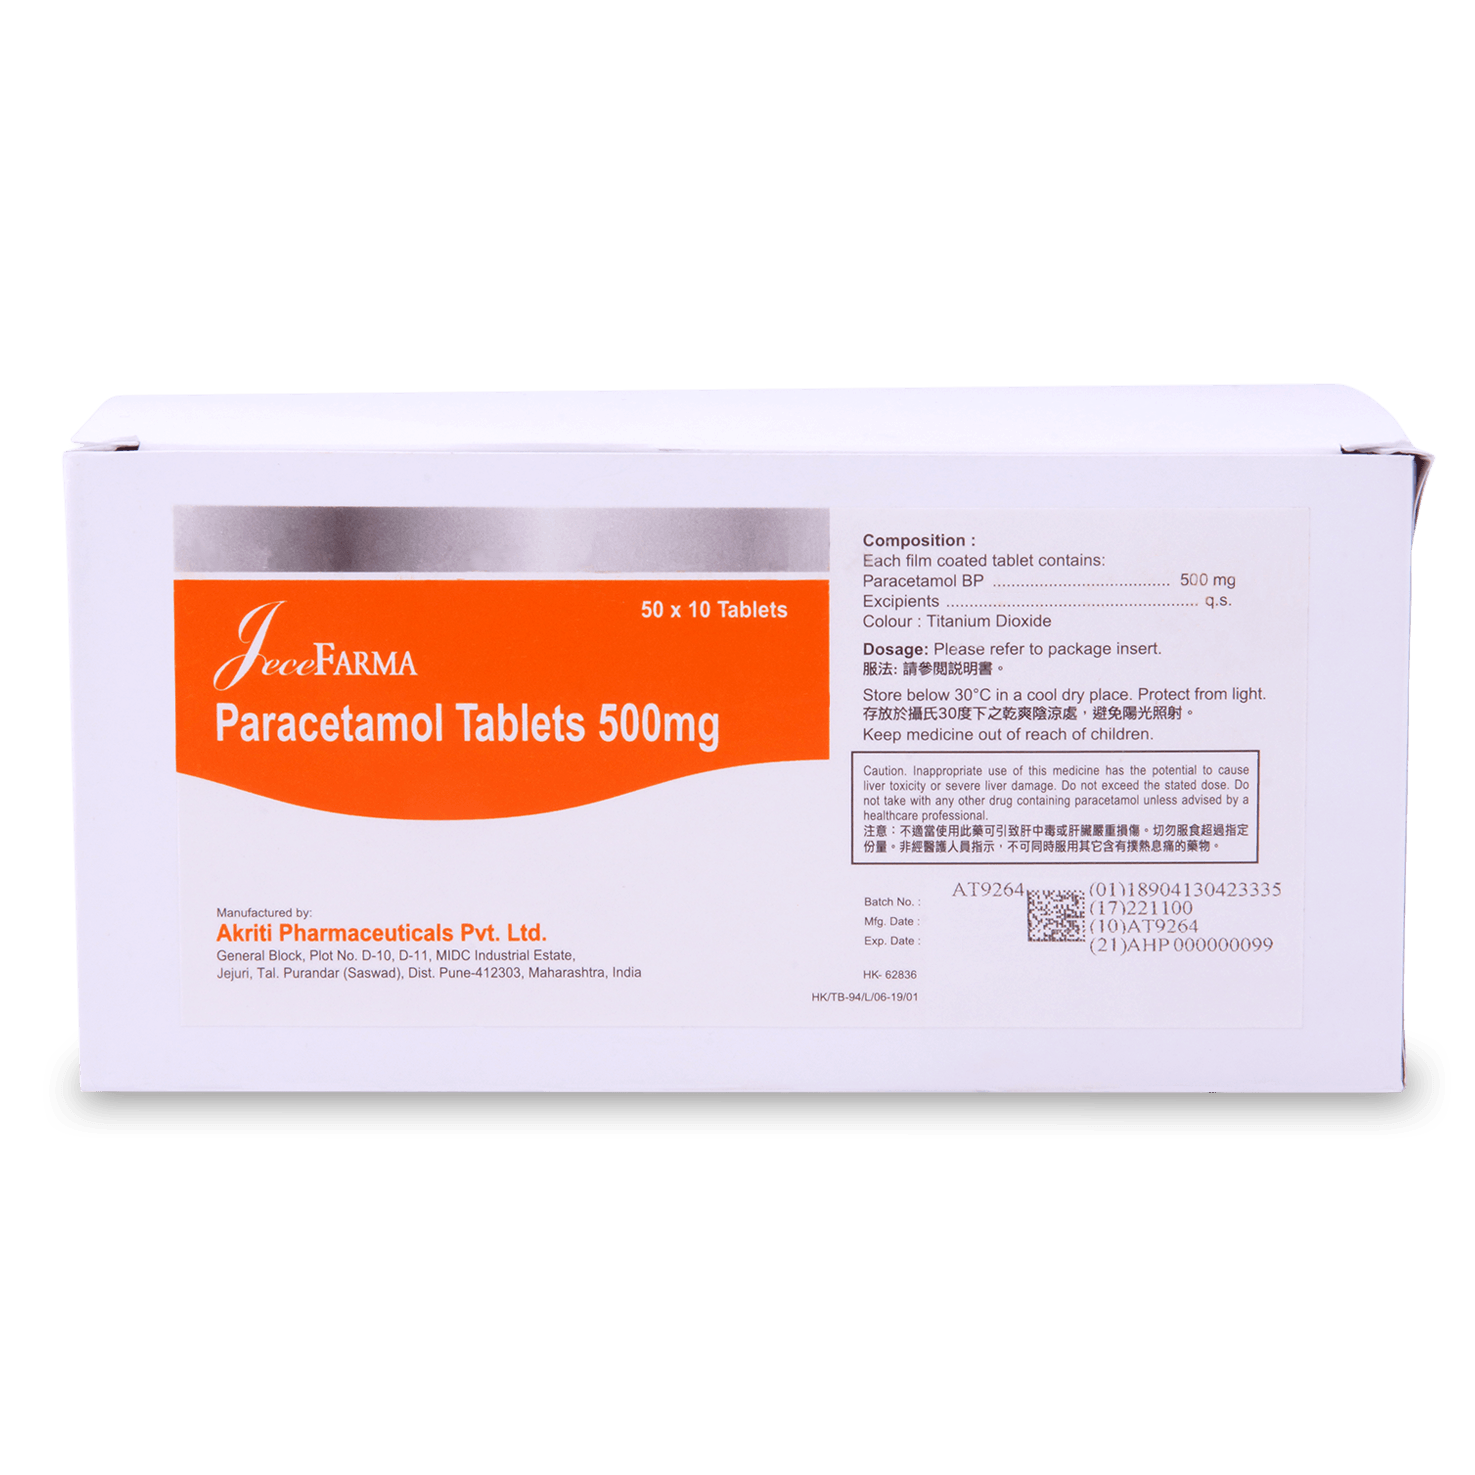 Jecefarma Paracetamol Tablets 500mg 50 x 10's (NP)